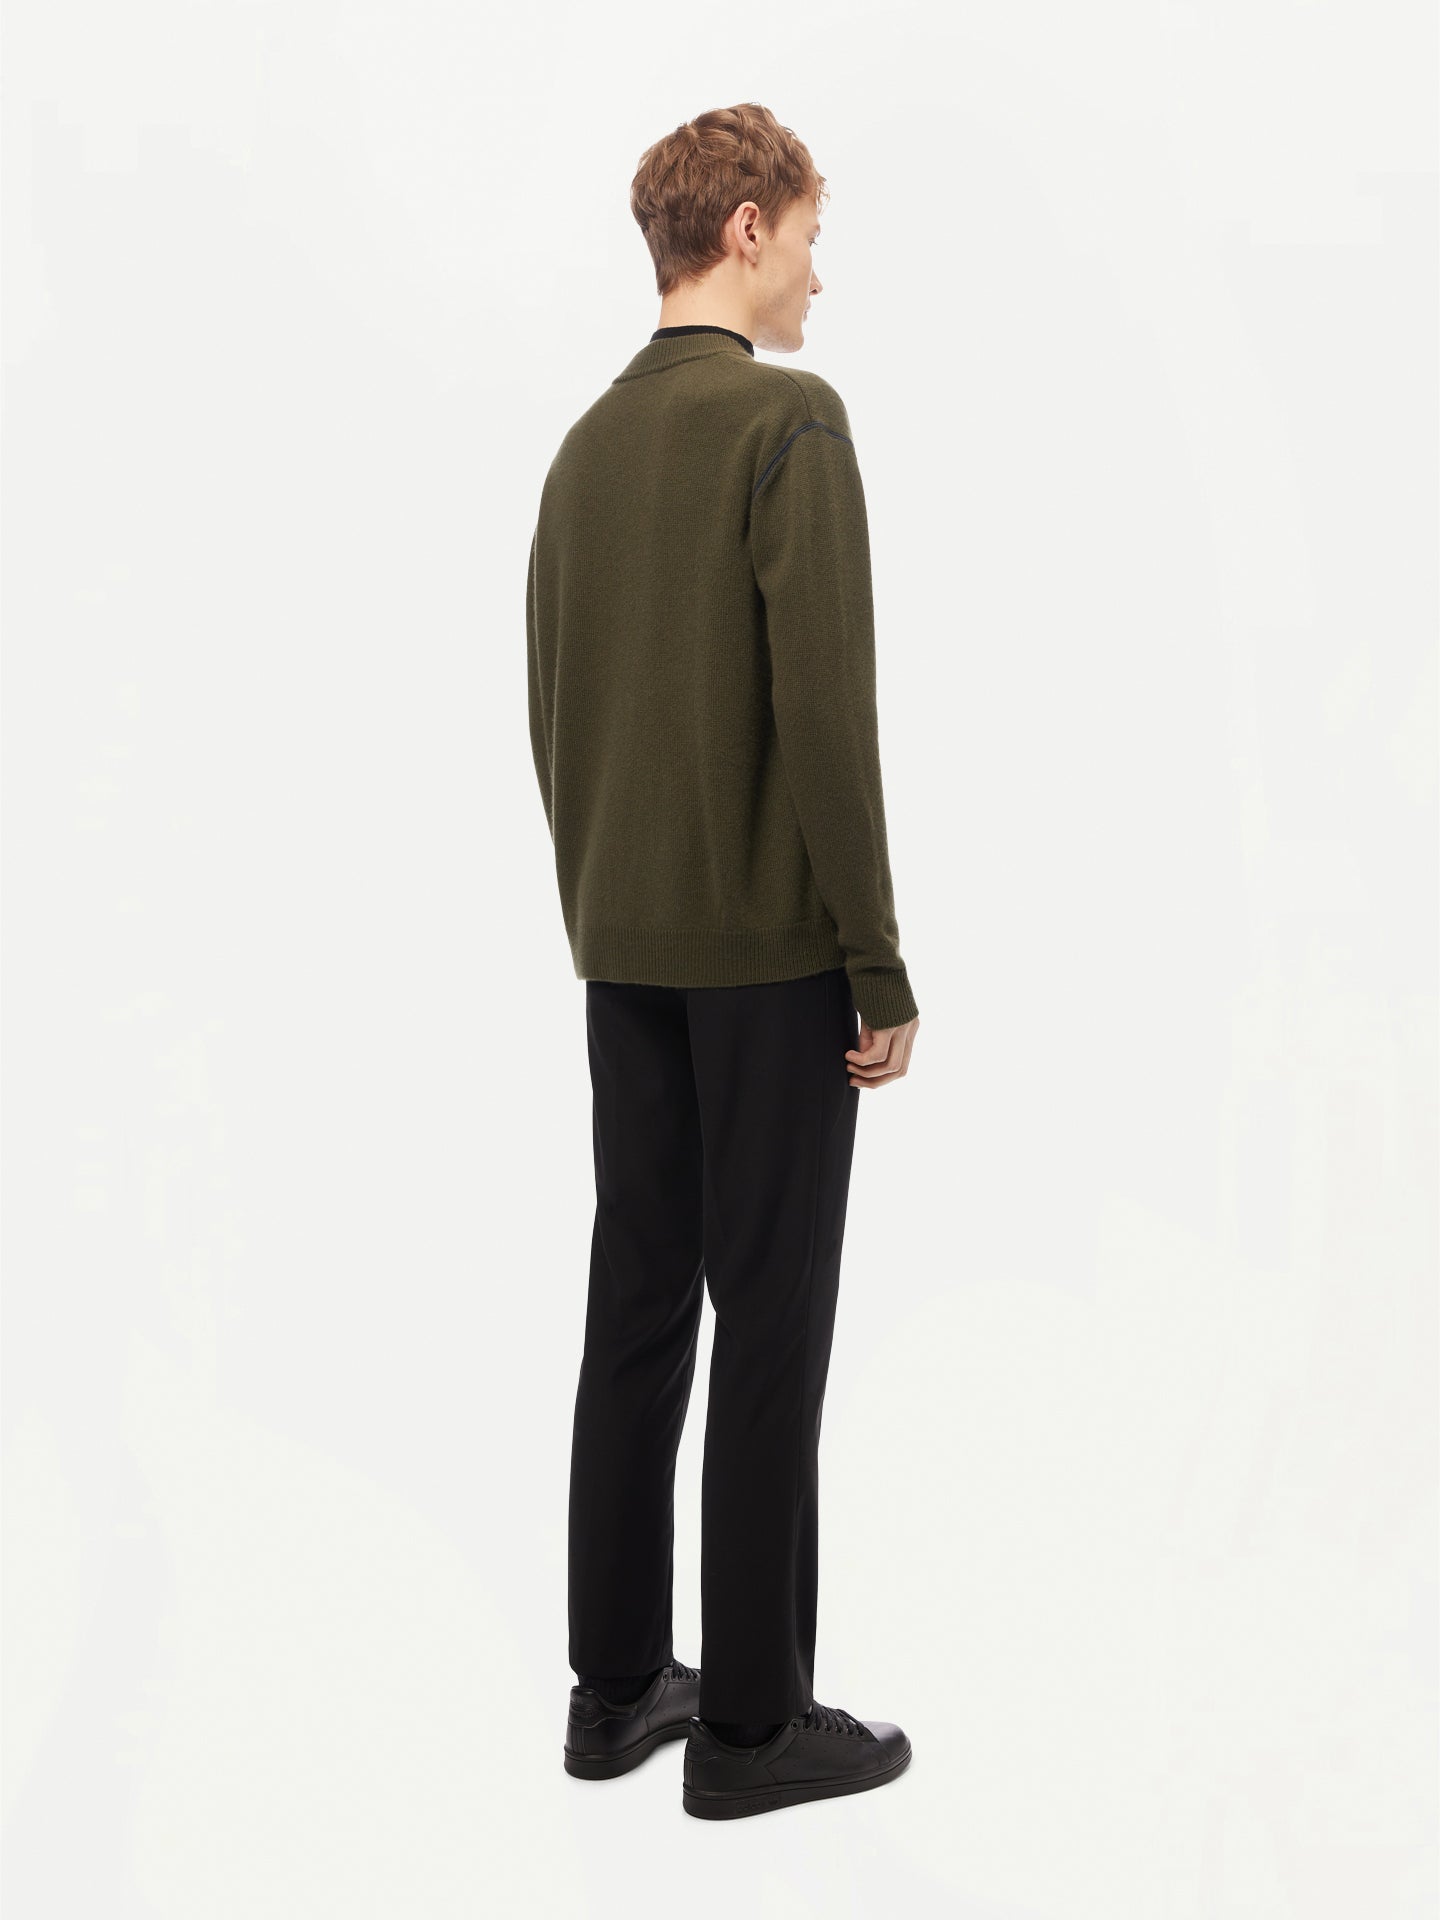 Men’s Cashmere Jacket with Zip Closure Capulet Olive - Gobi Cashmere